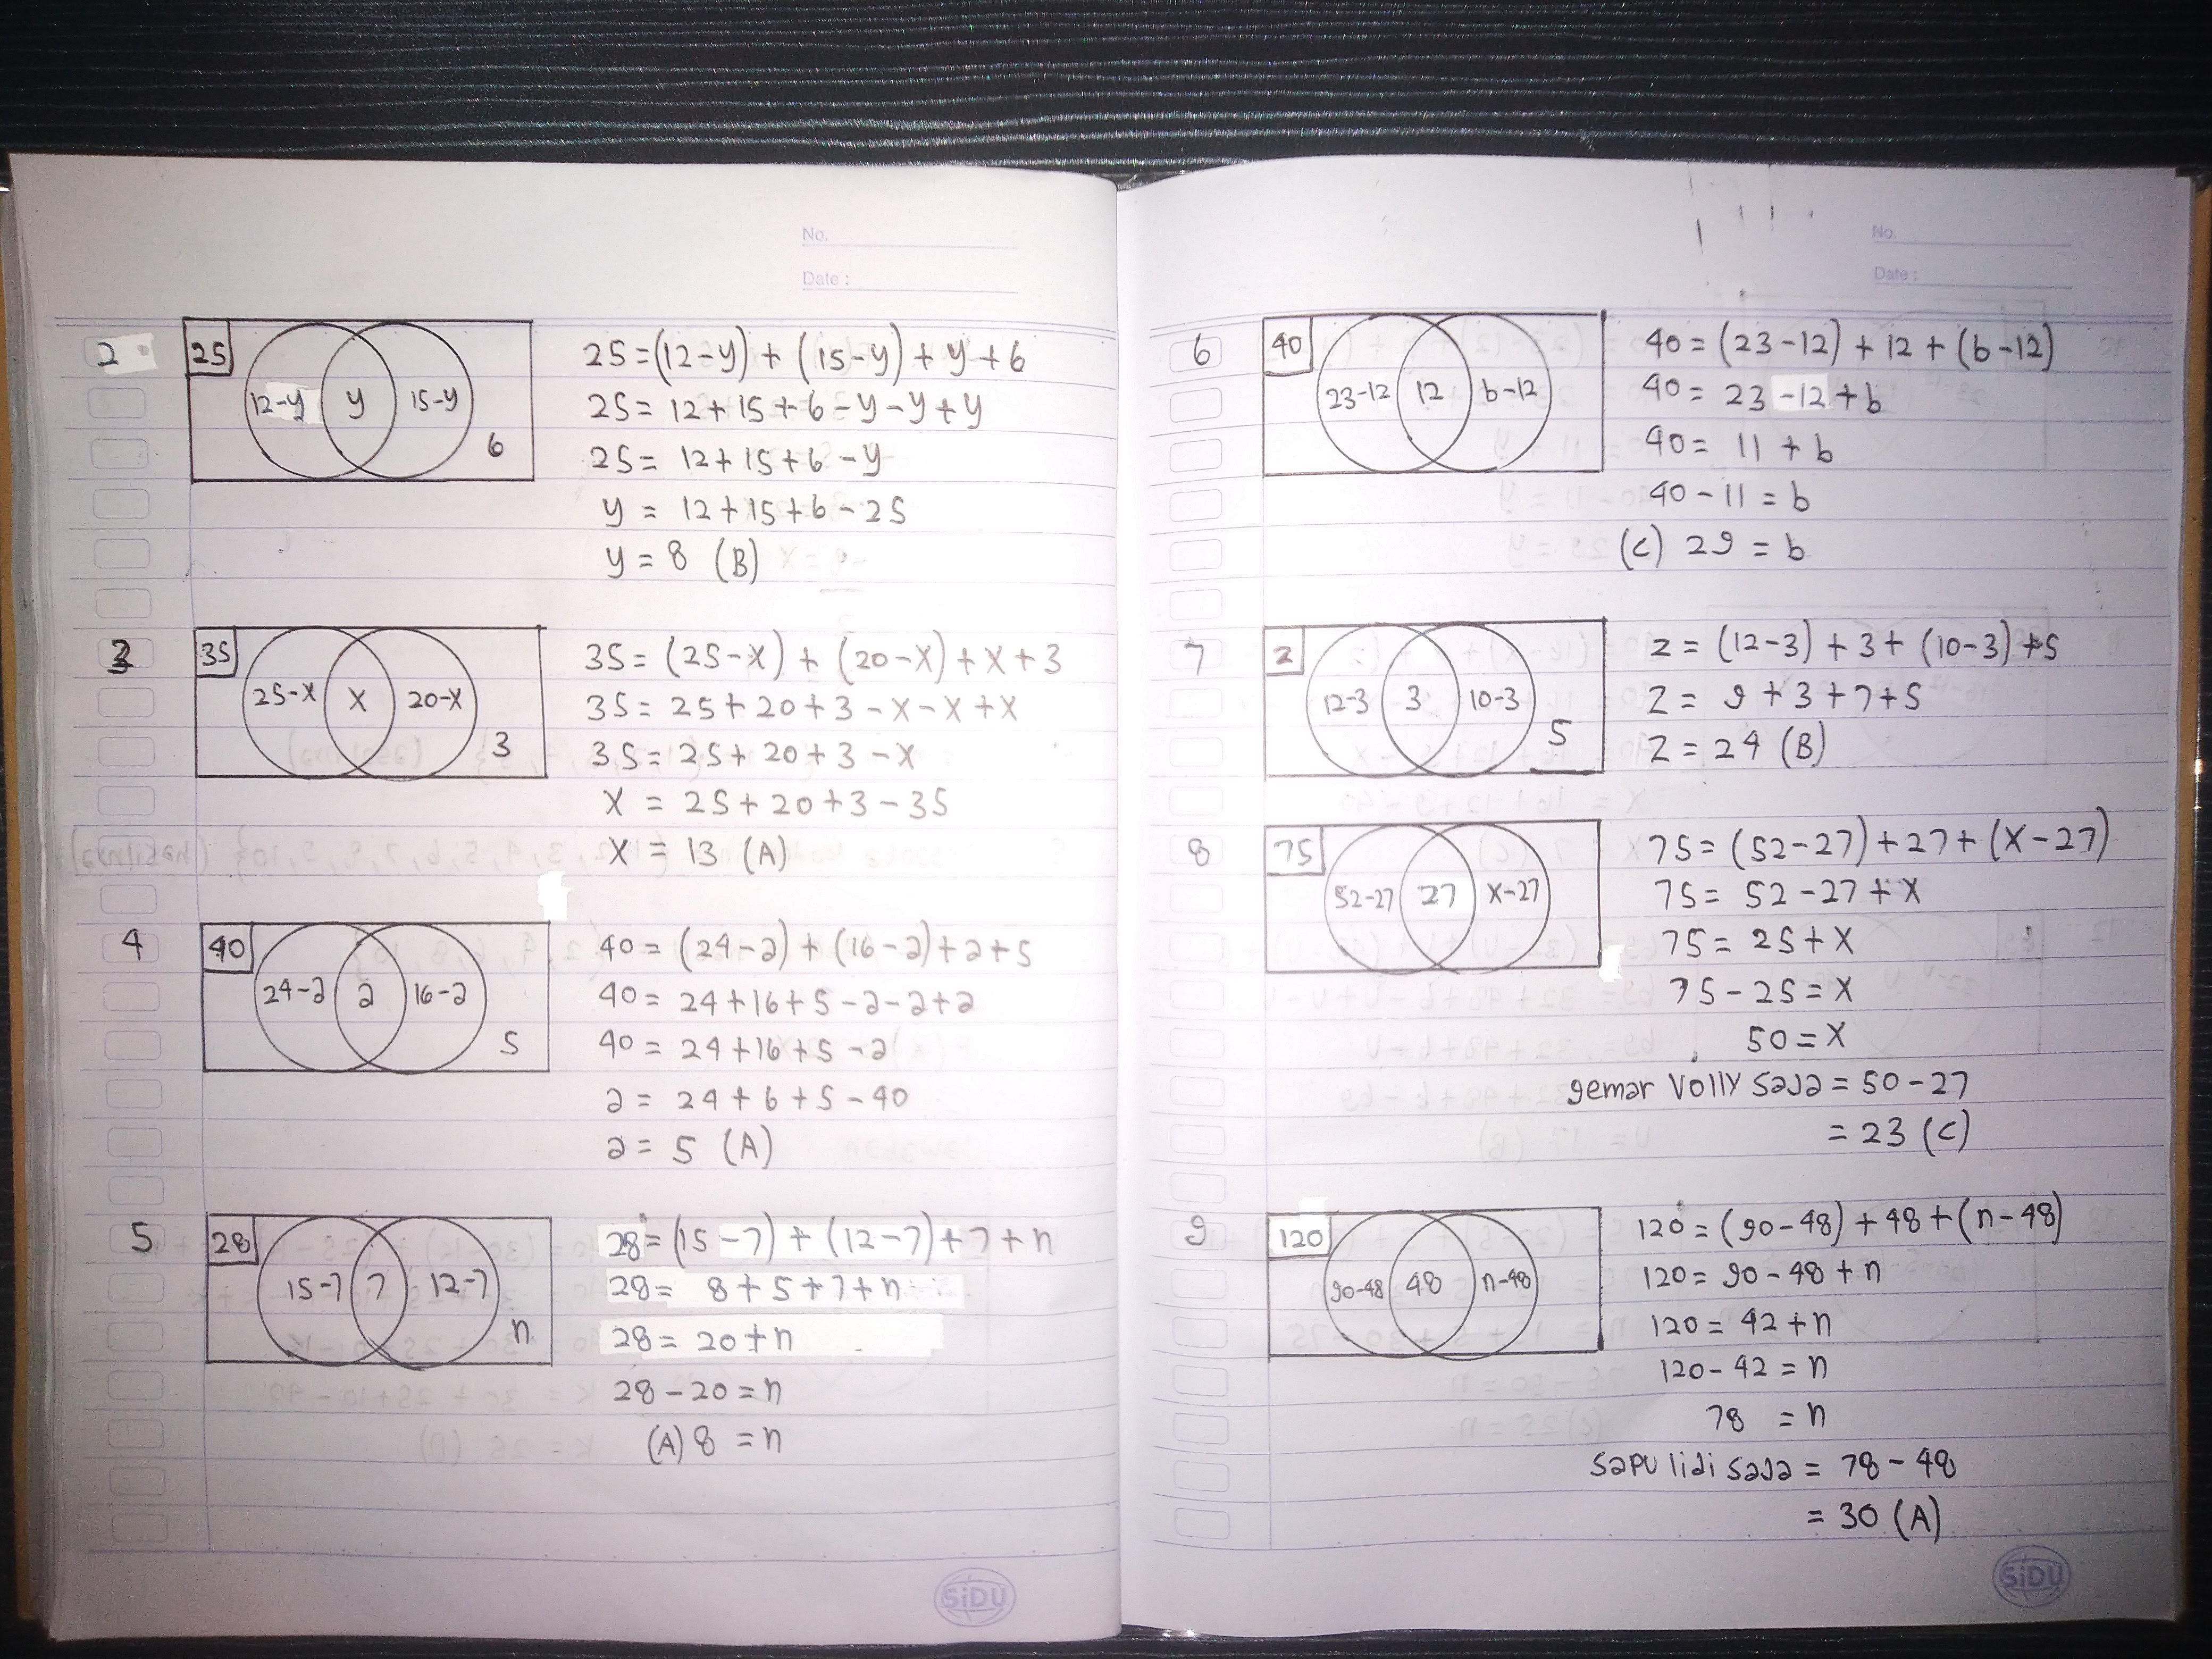 Soal latihan himpunan Matematika SMP kelas 7, kelas 8, kelas 9